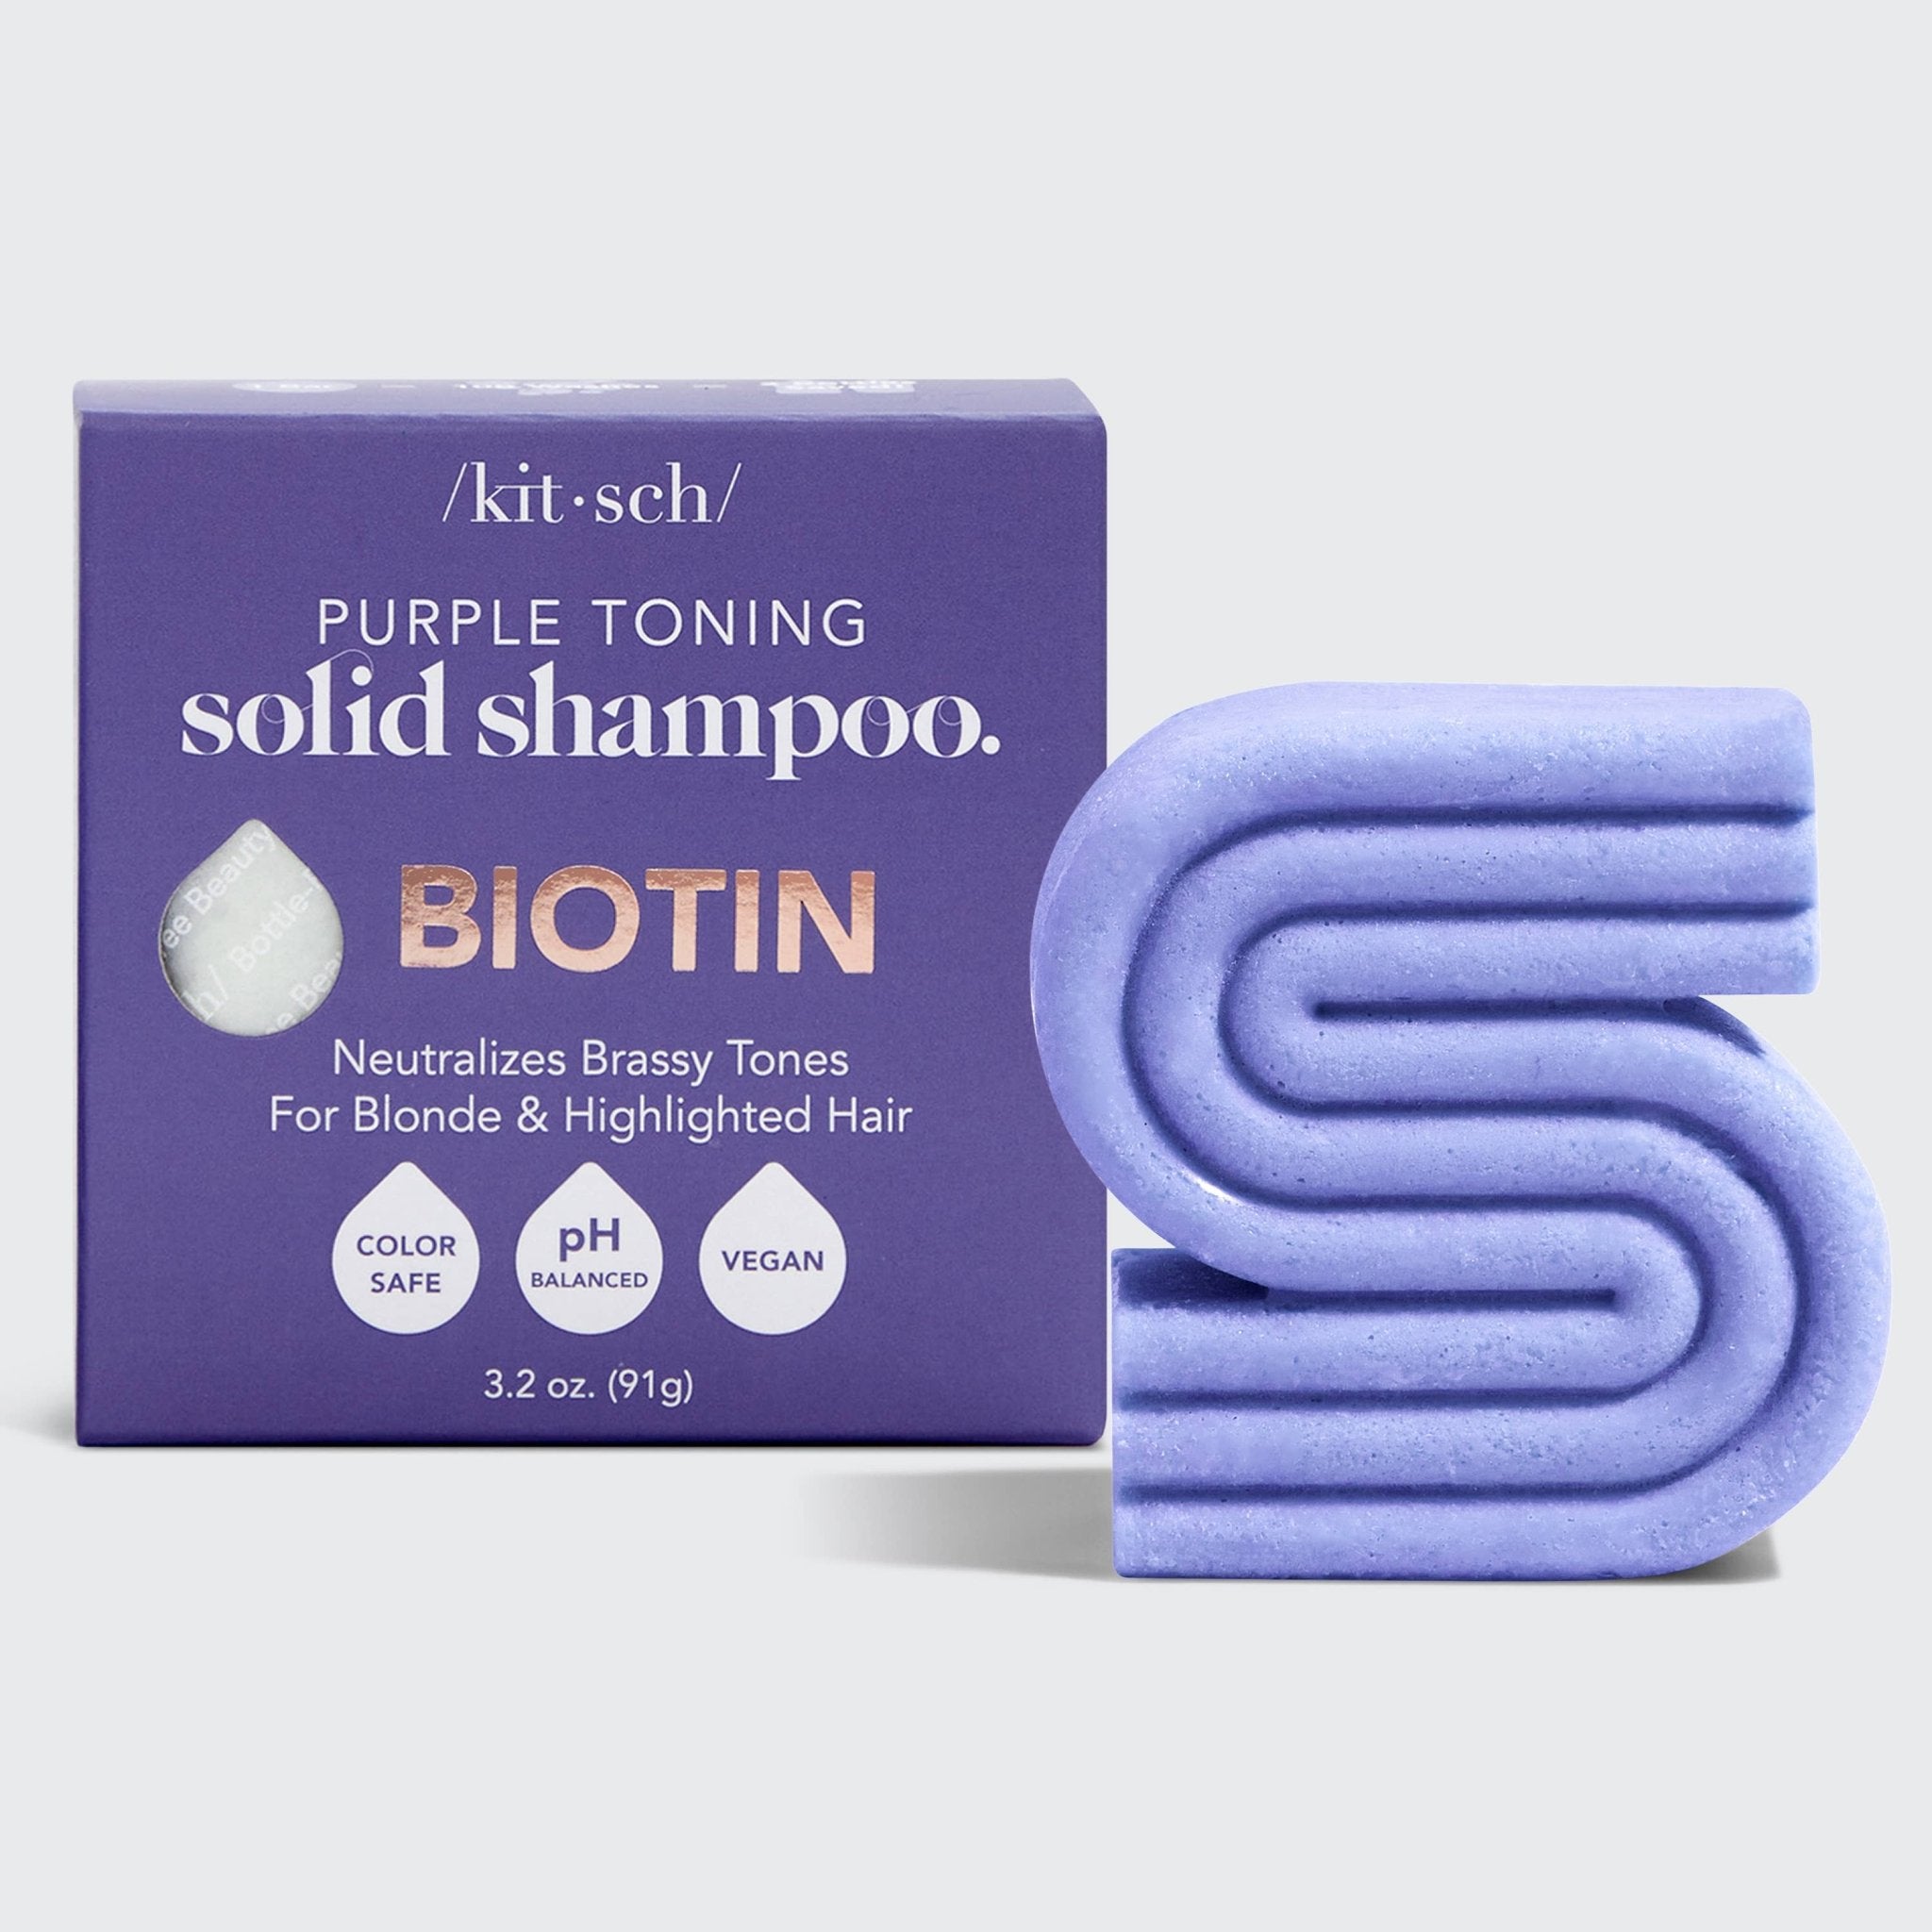 KITSCH Purple Toning Shampoo Bar With Biotin